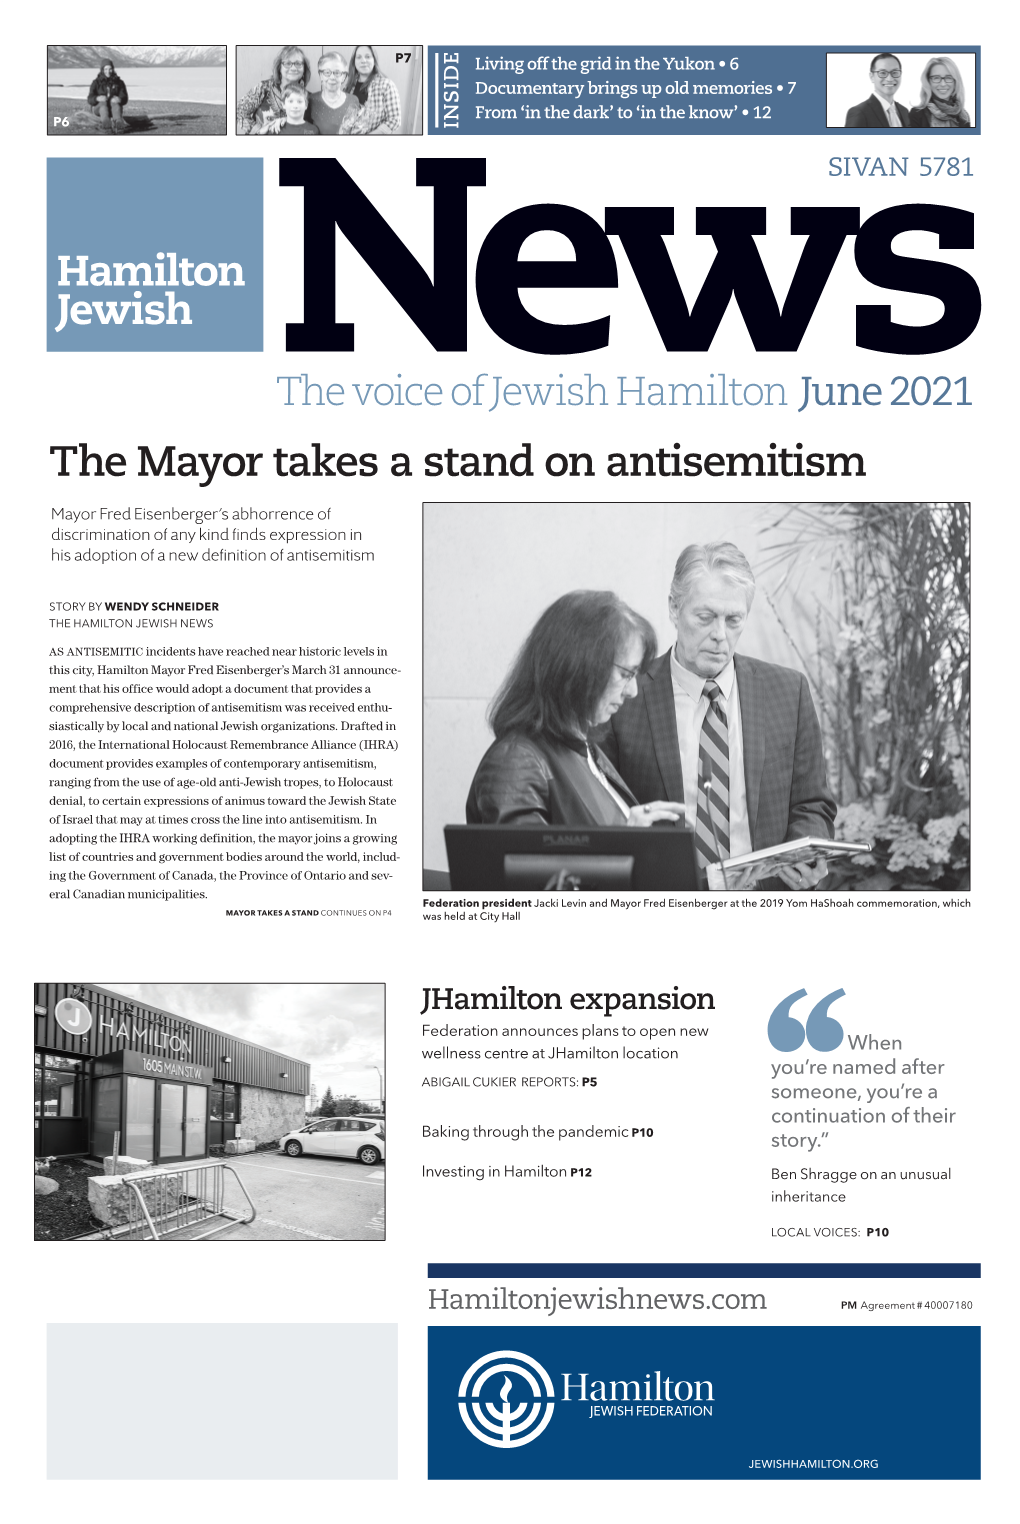 Hamilton Jewish Federation